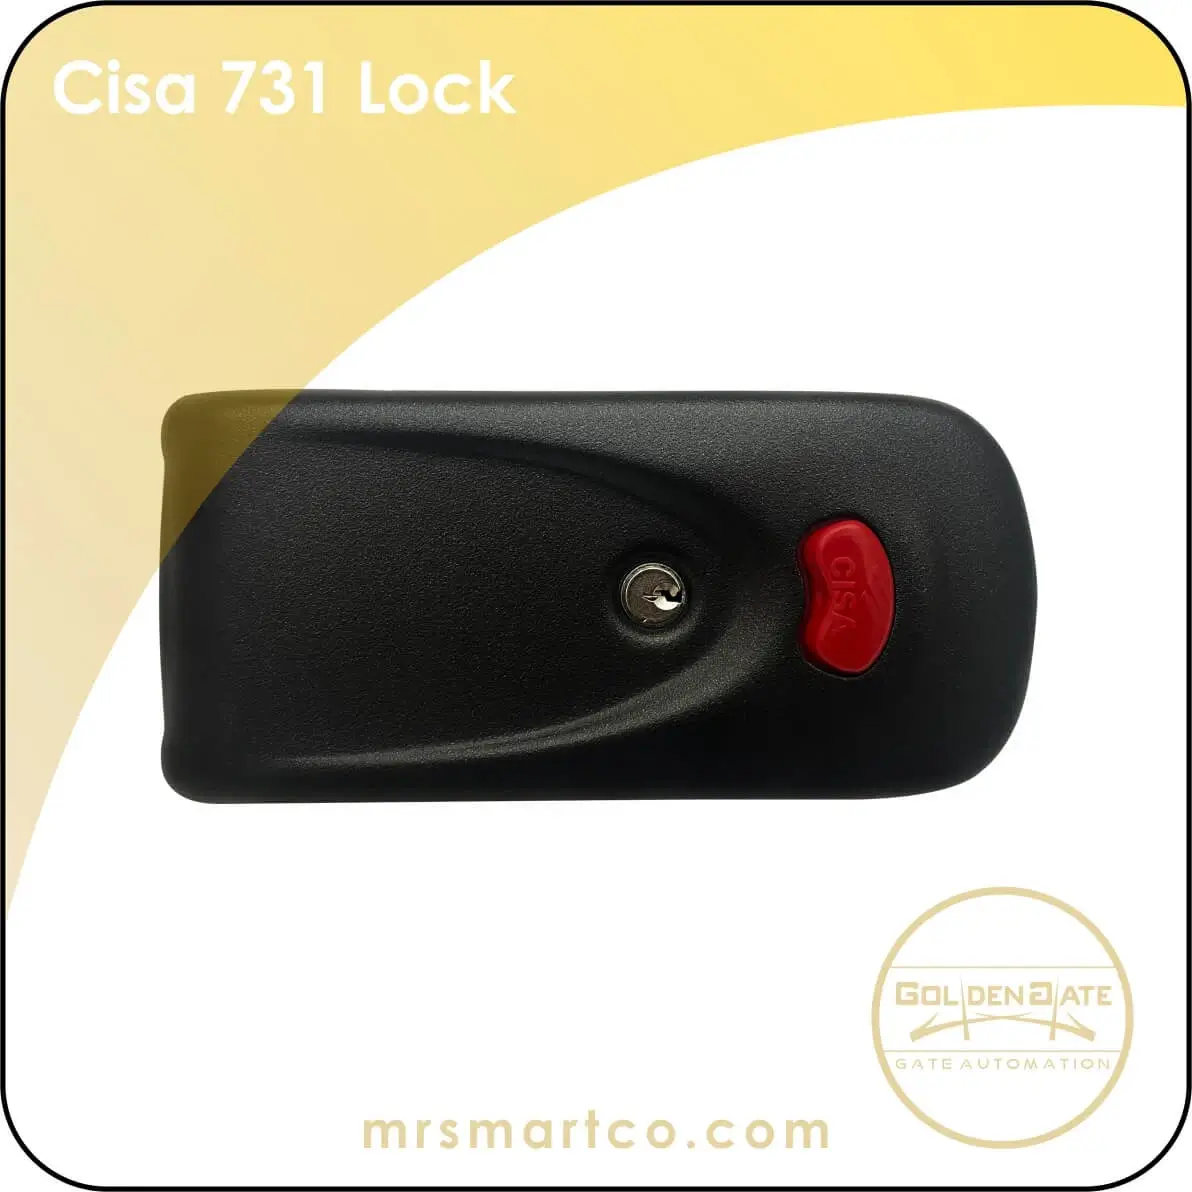 Cisa 731 Lock